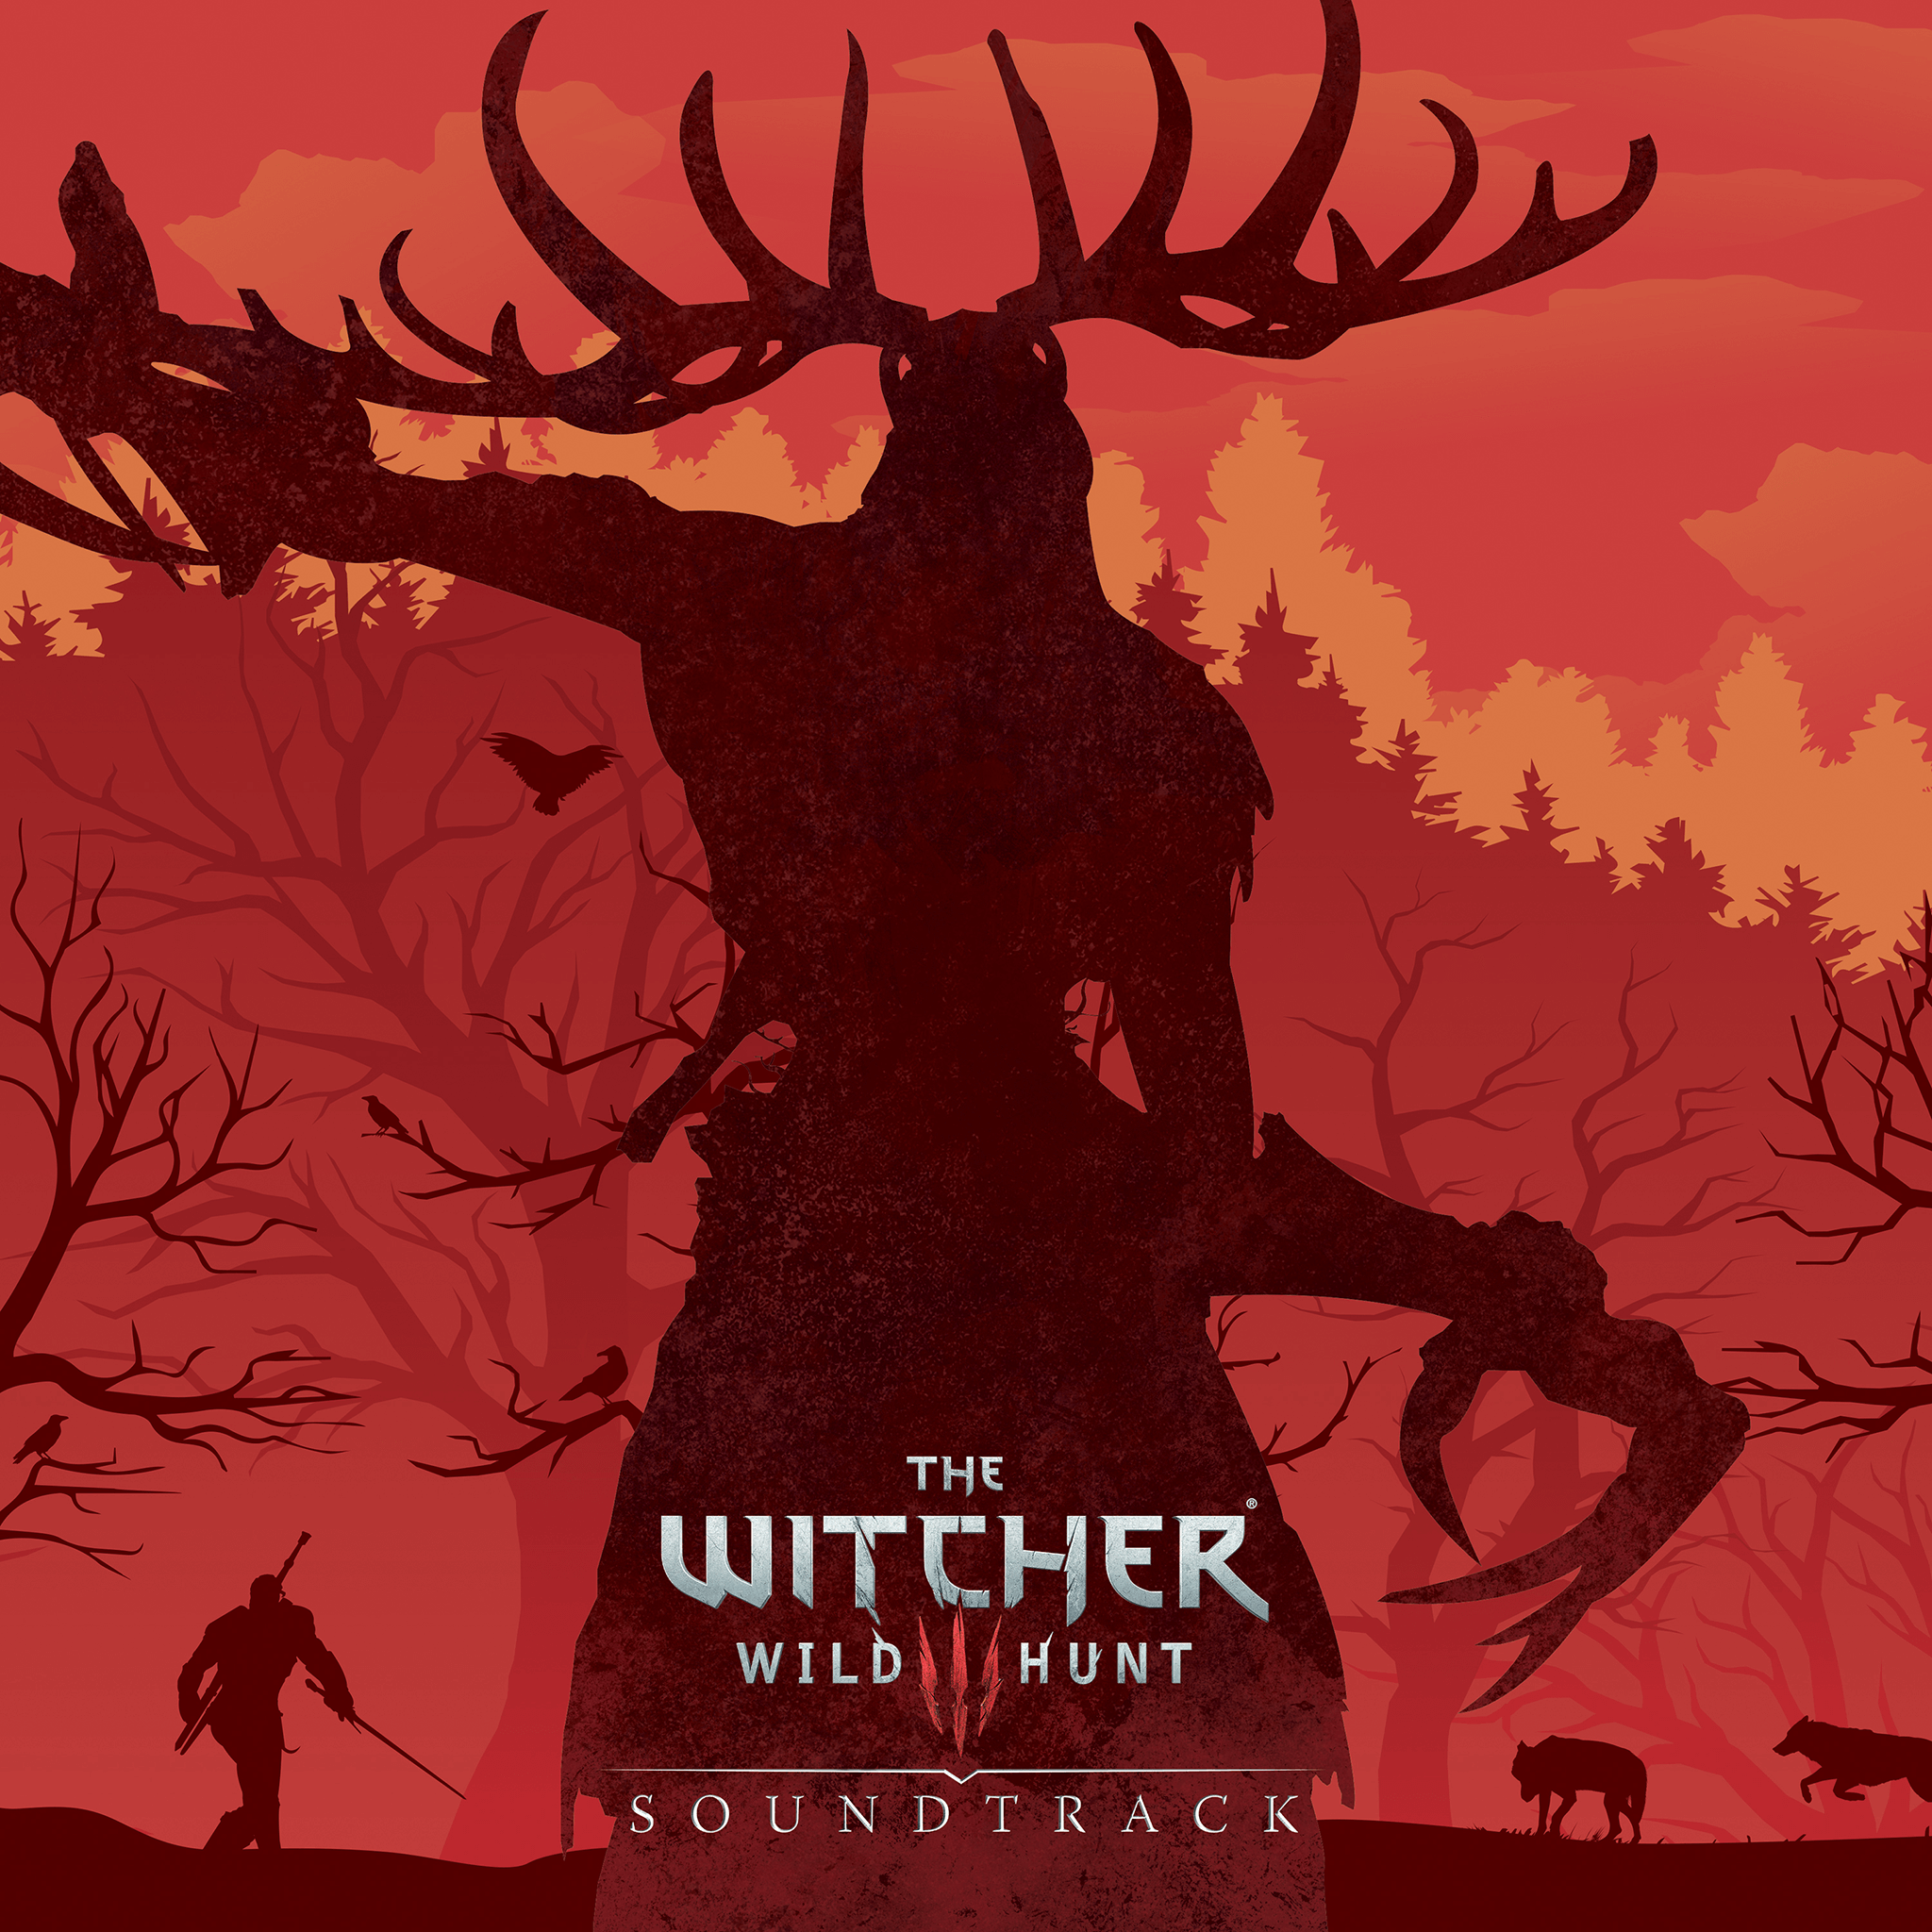 The Witcher 3 WILD HUNT - PS4 w/ Bonus Soundtrack disc Playstation 4,  Complete